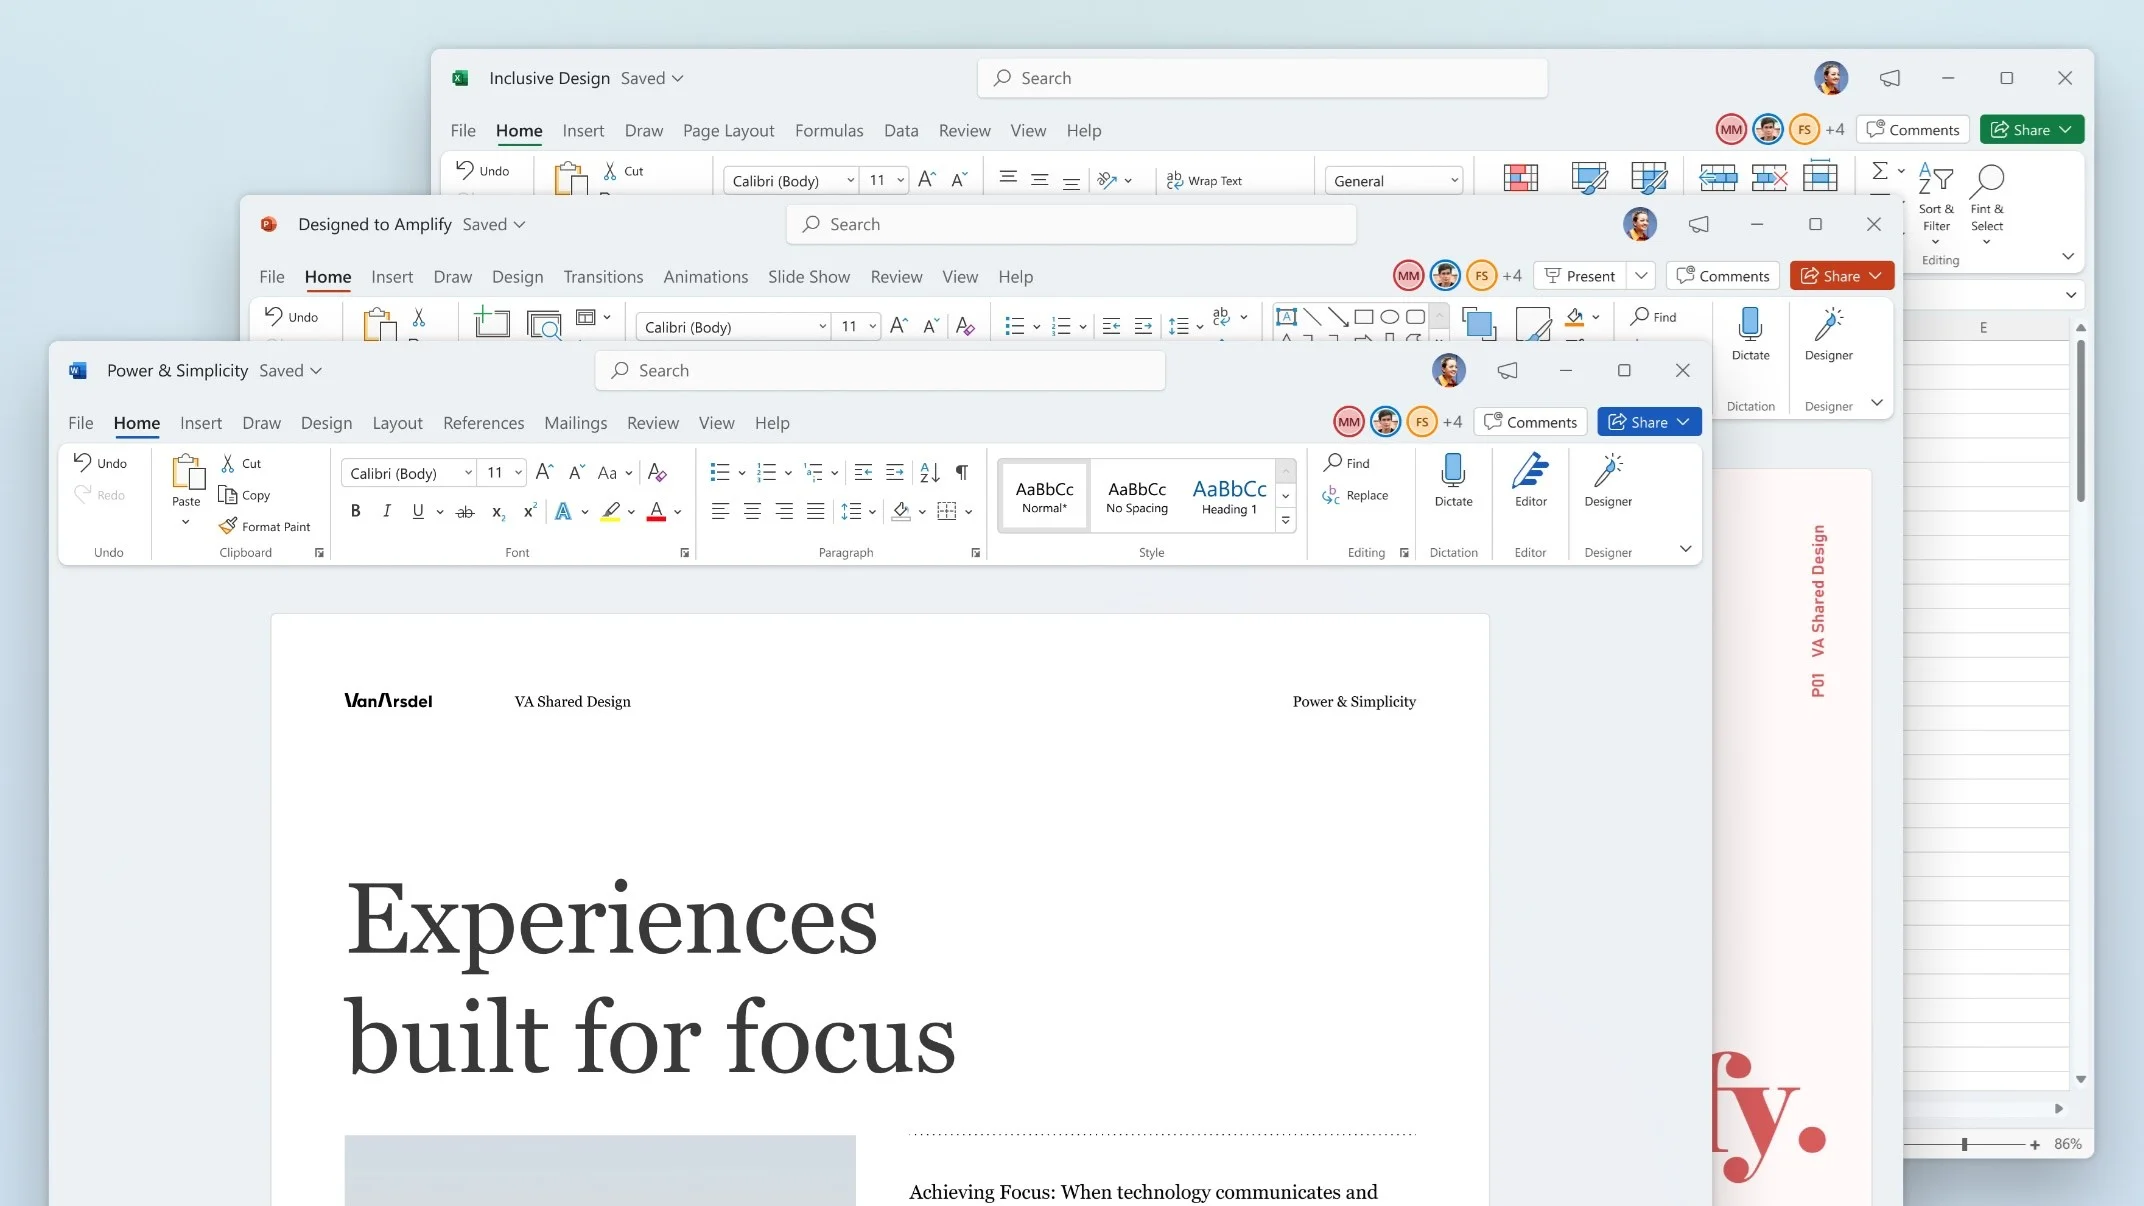 Скриншот Microsoft Office 2021